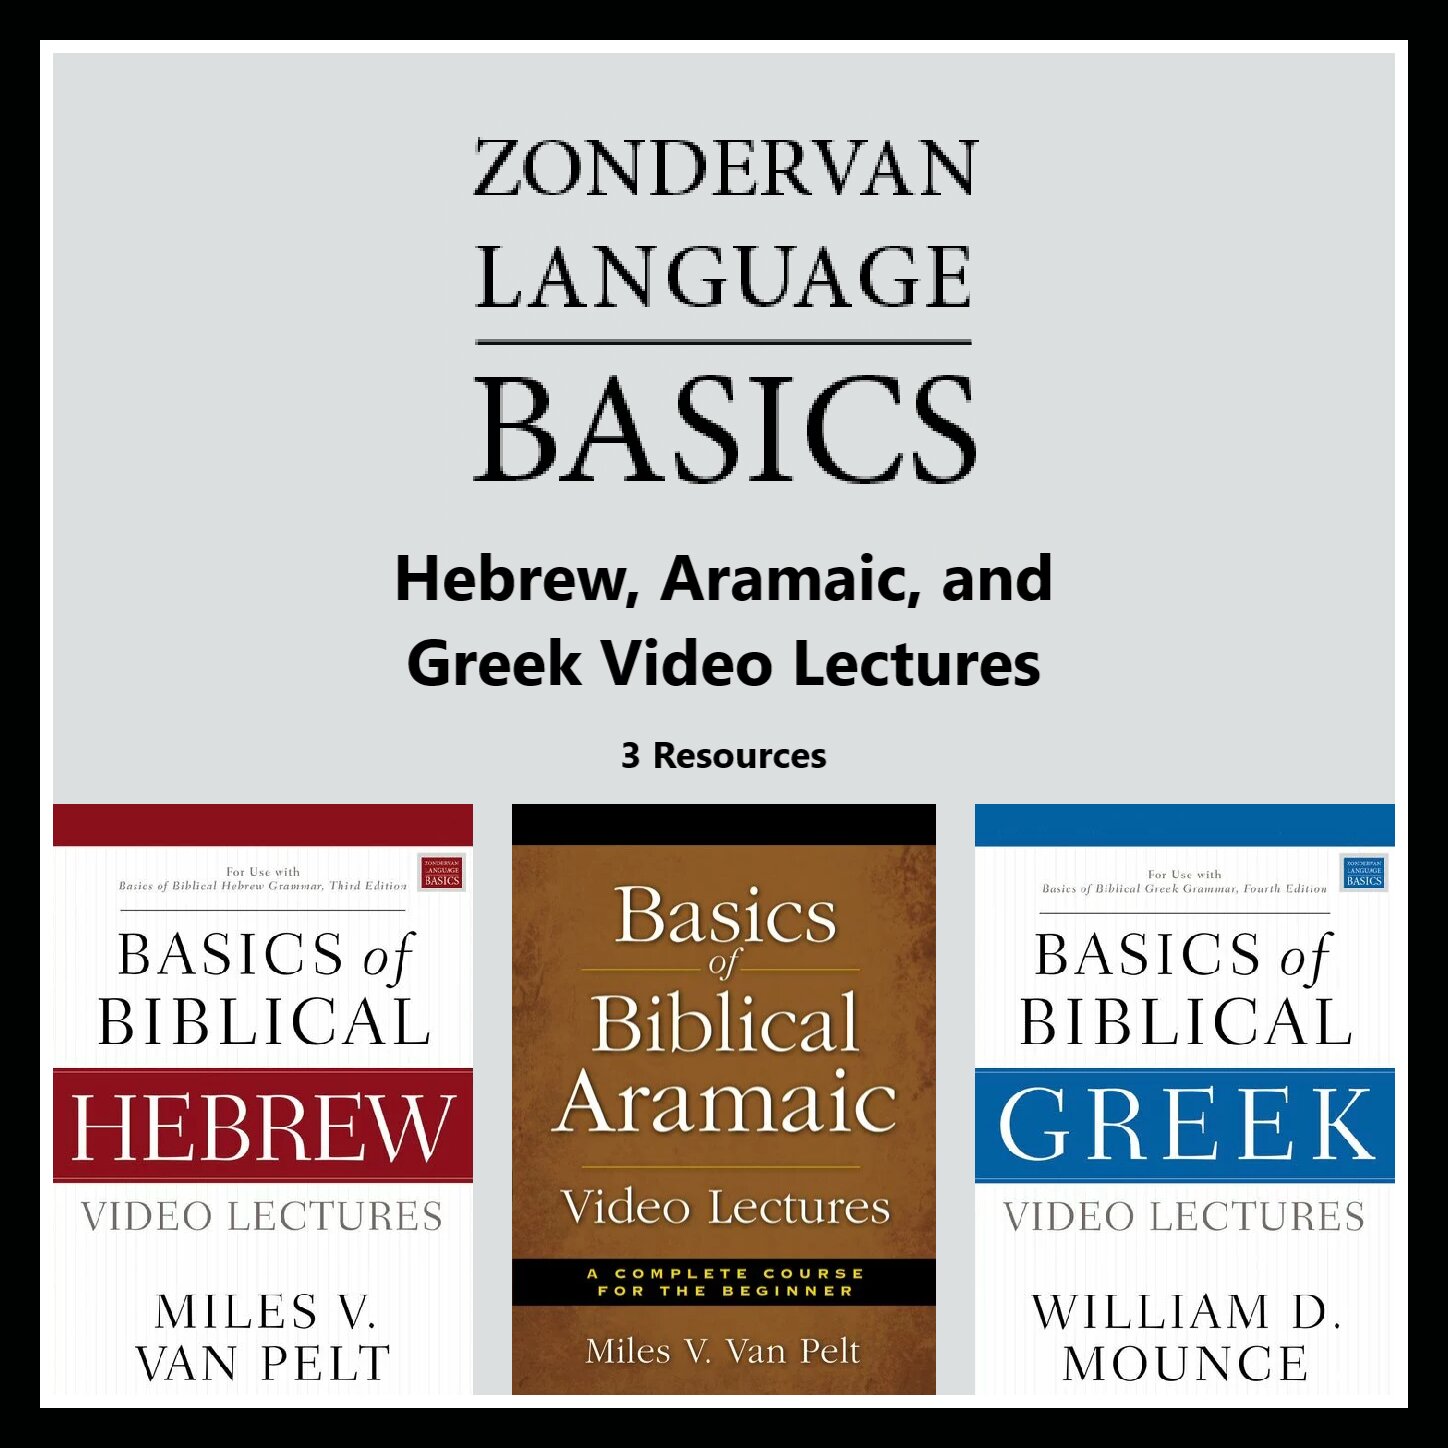 Zondervan Language Basics Video Course Pack: Hebrew, Aramaic, and Greek (3 Resources)